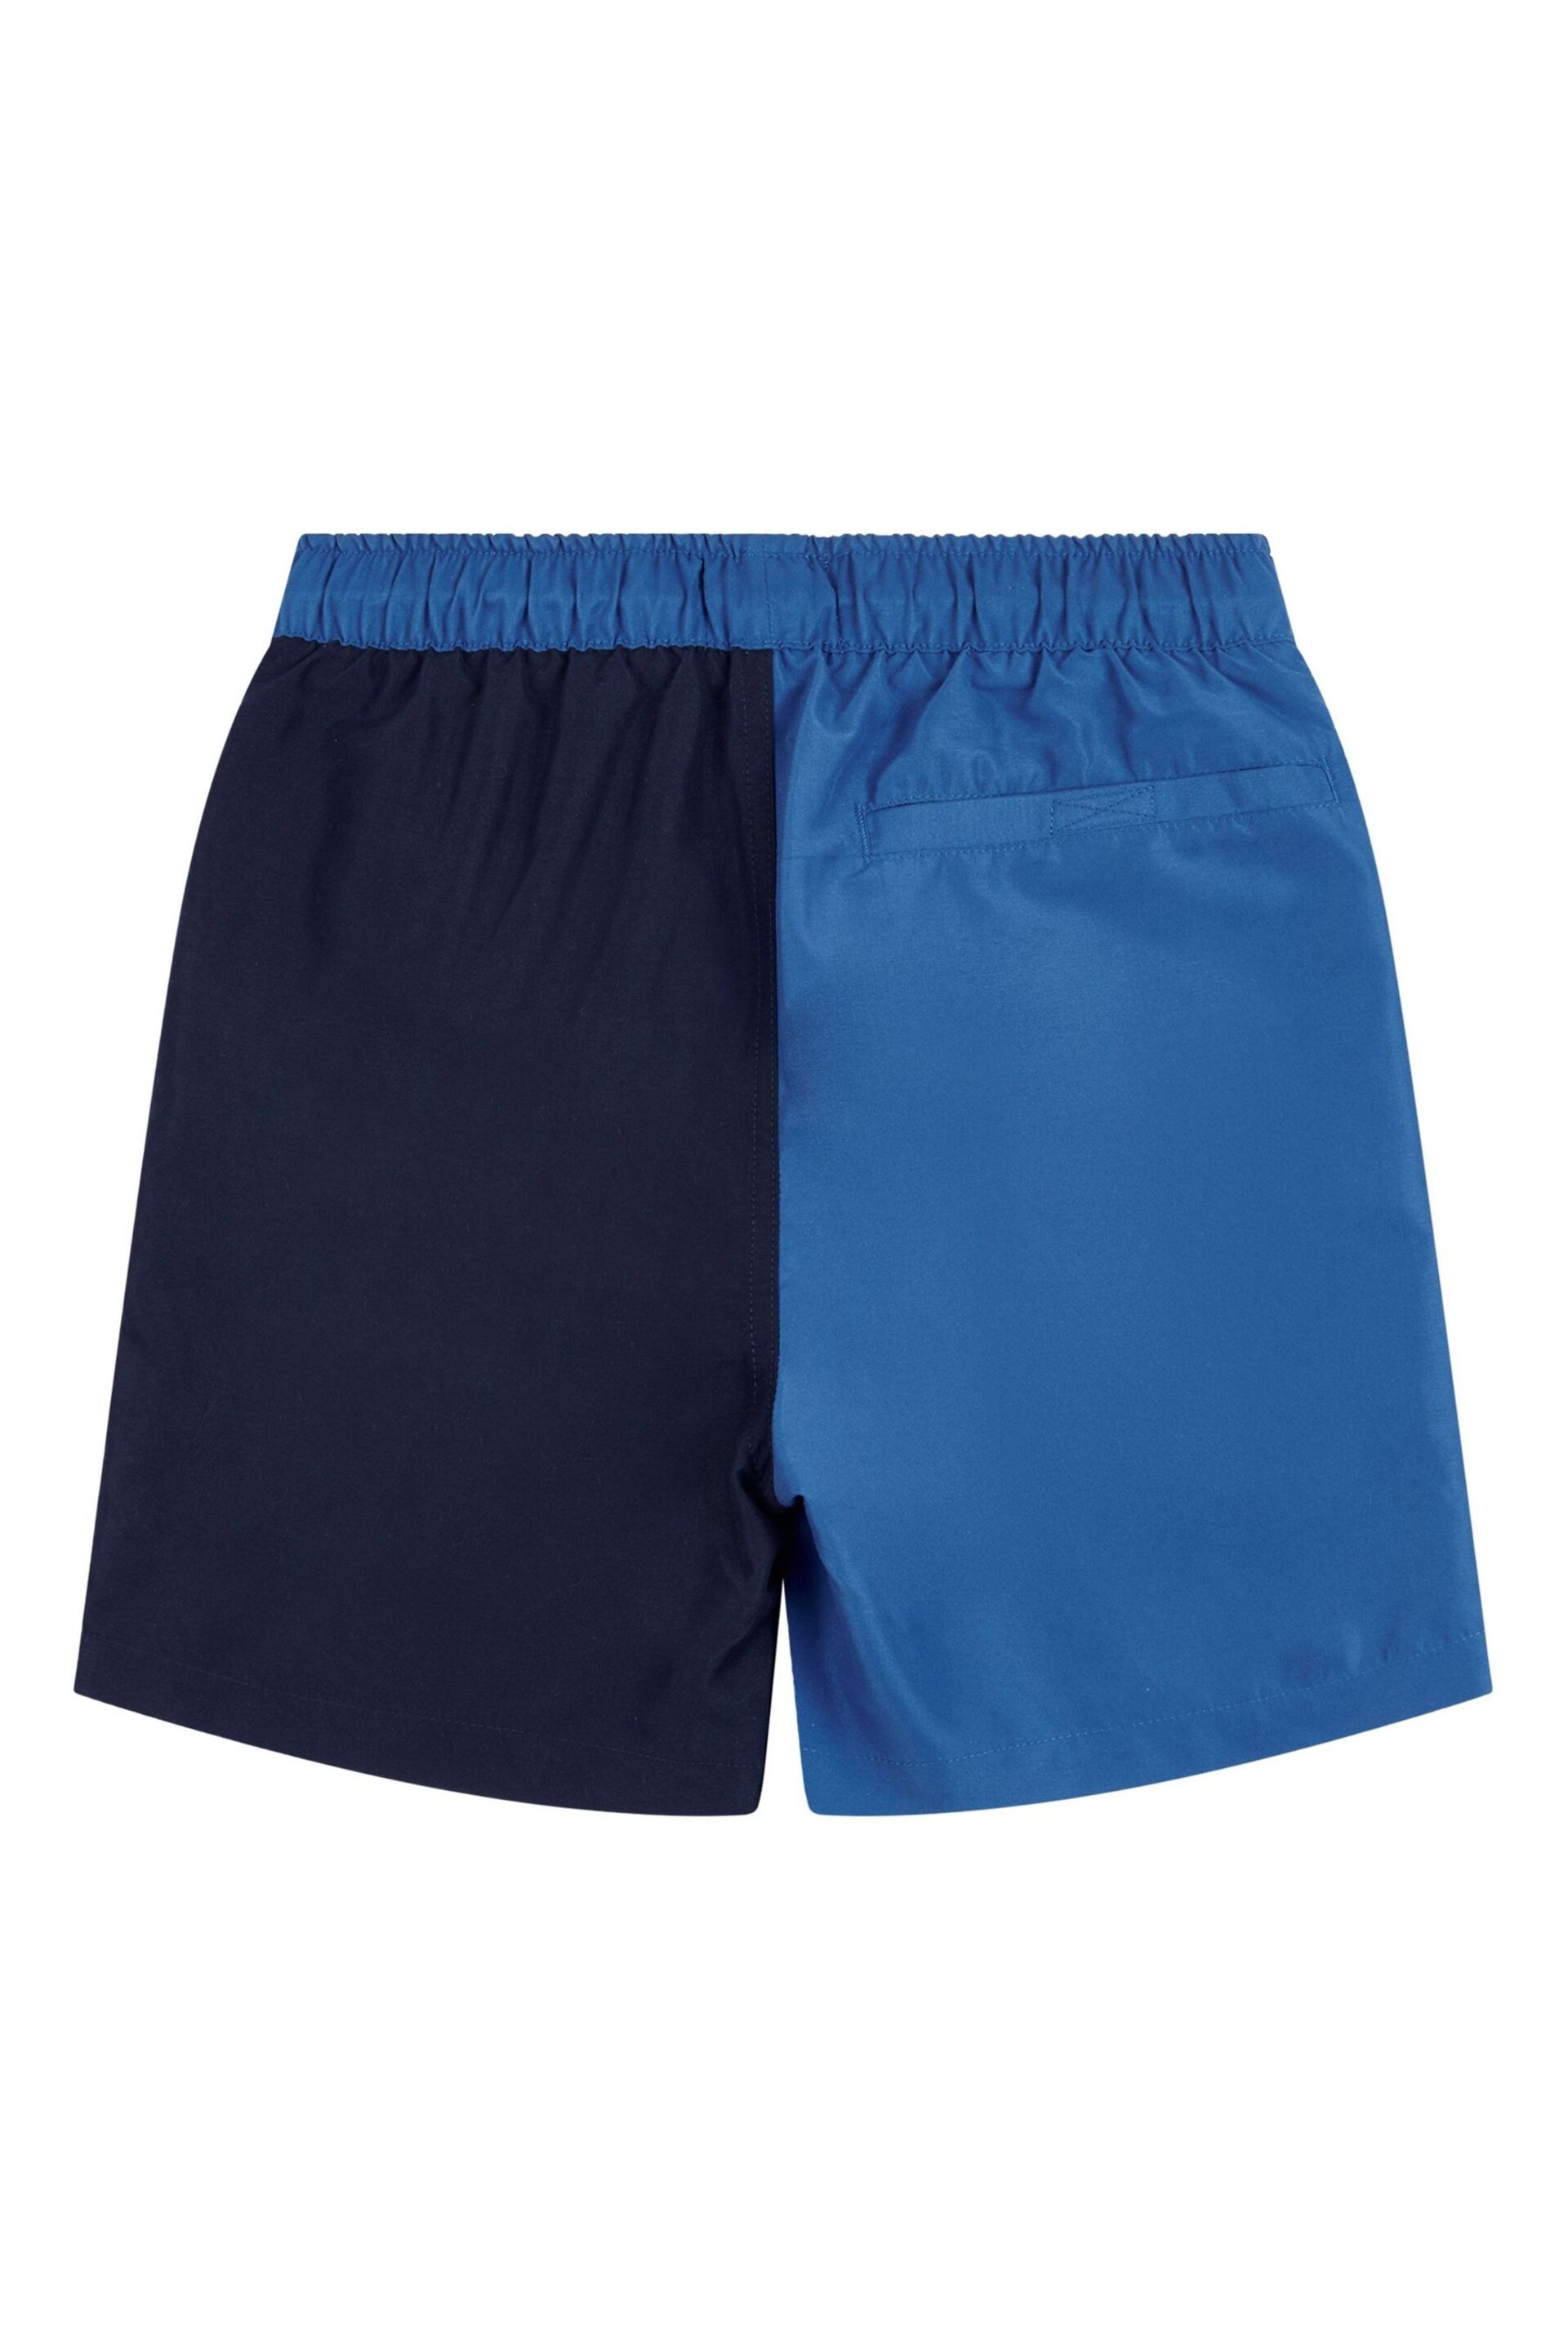 Jack Wills Blue Devon Colour Block Swim Shorts - Image 2 of 3